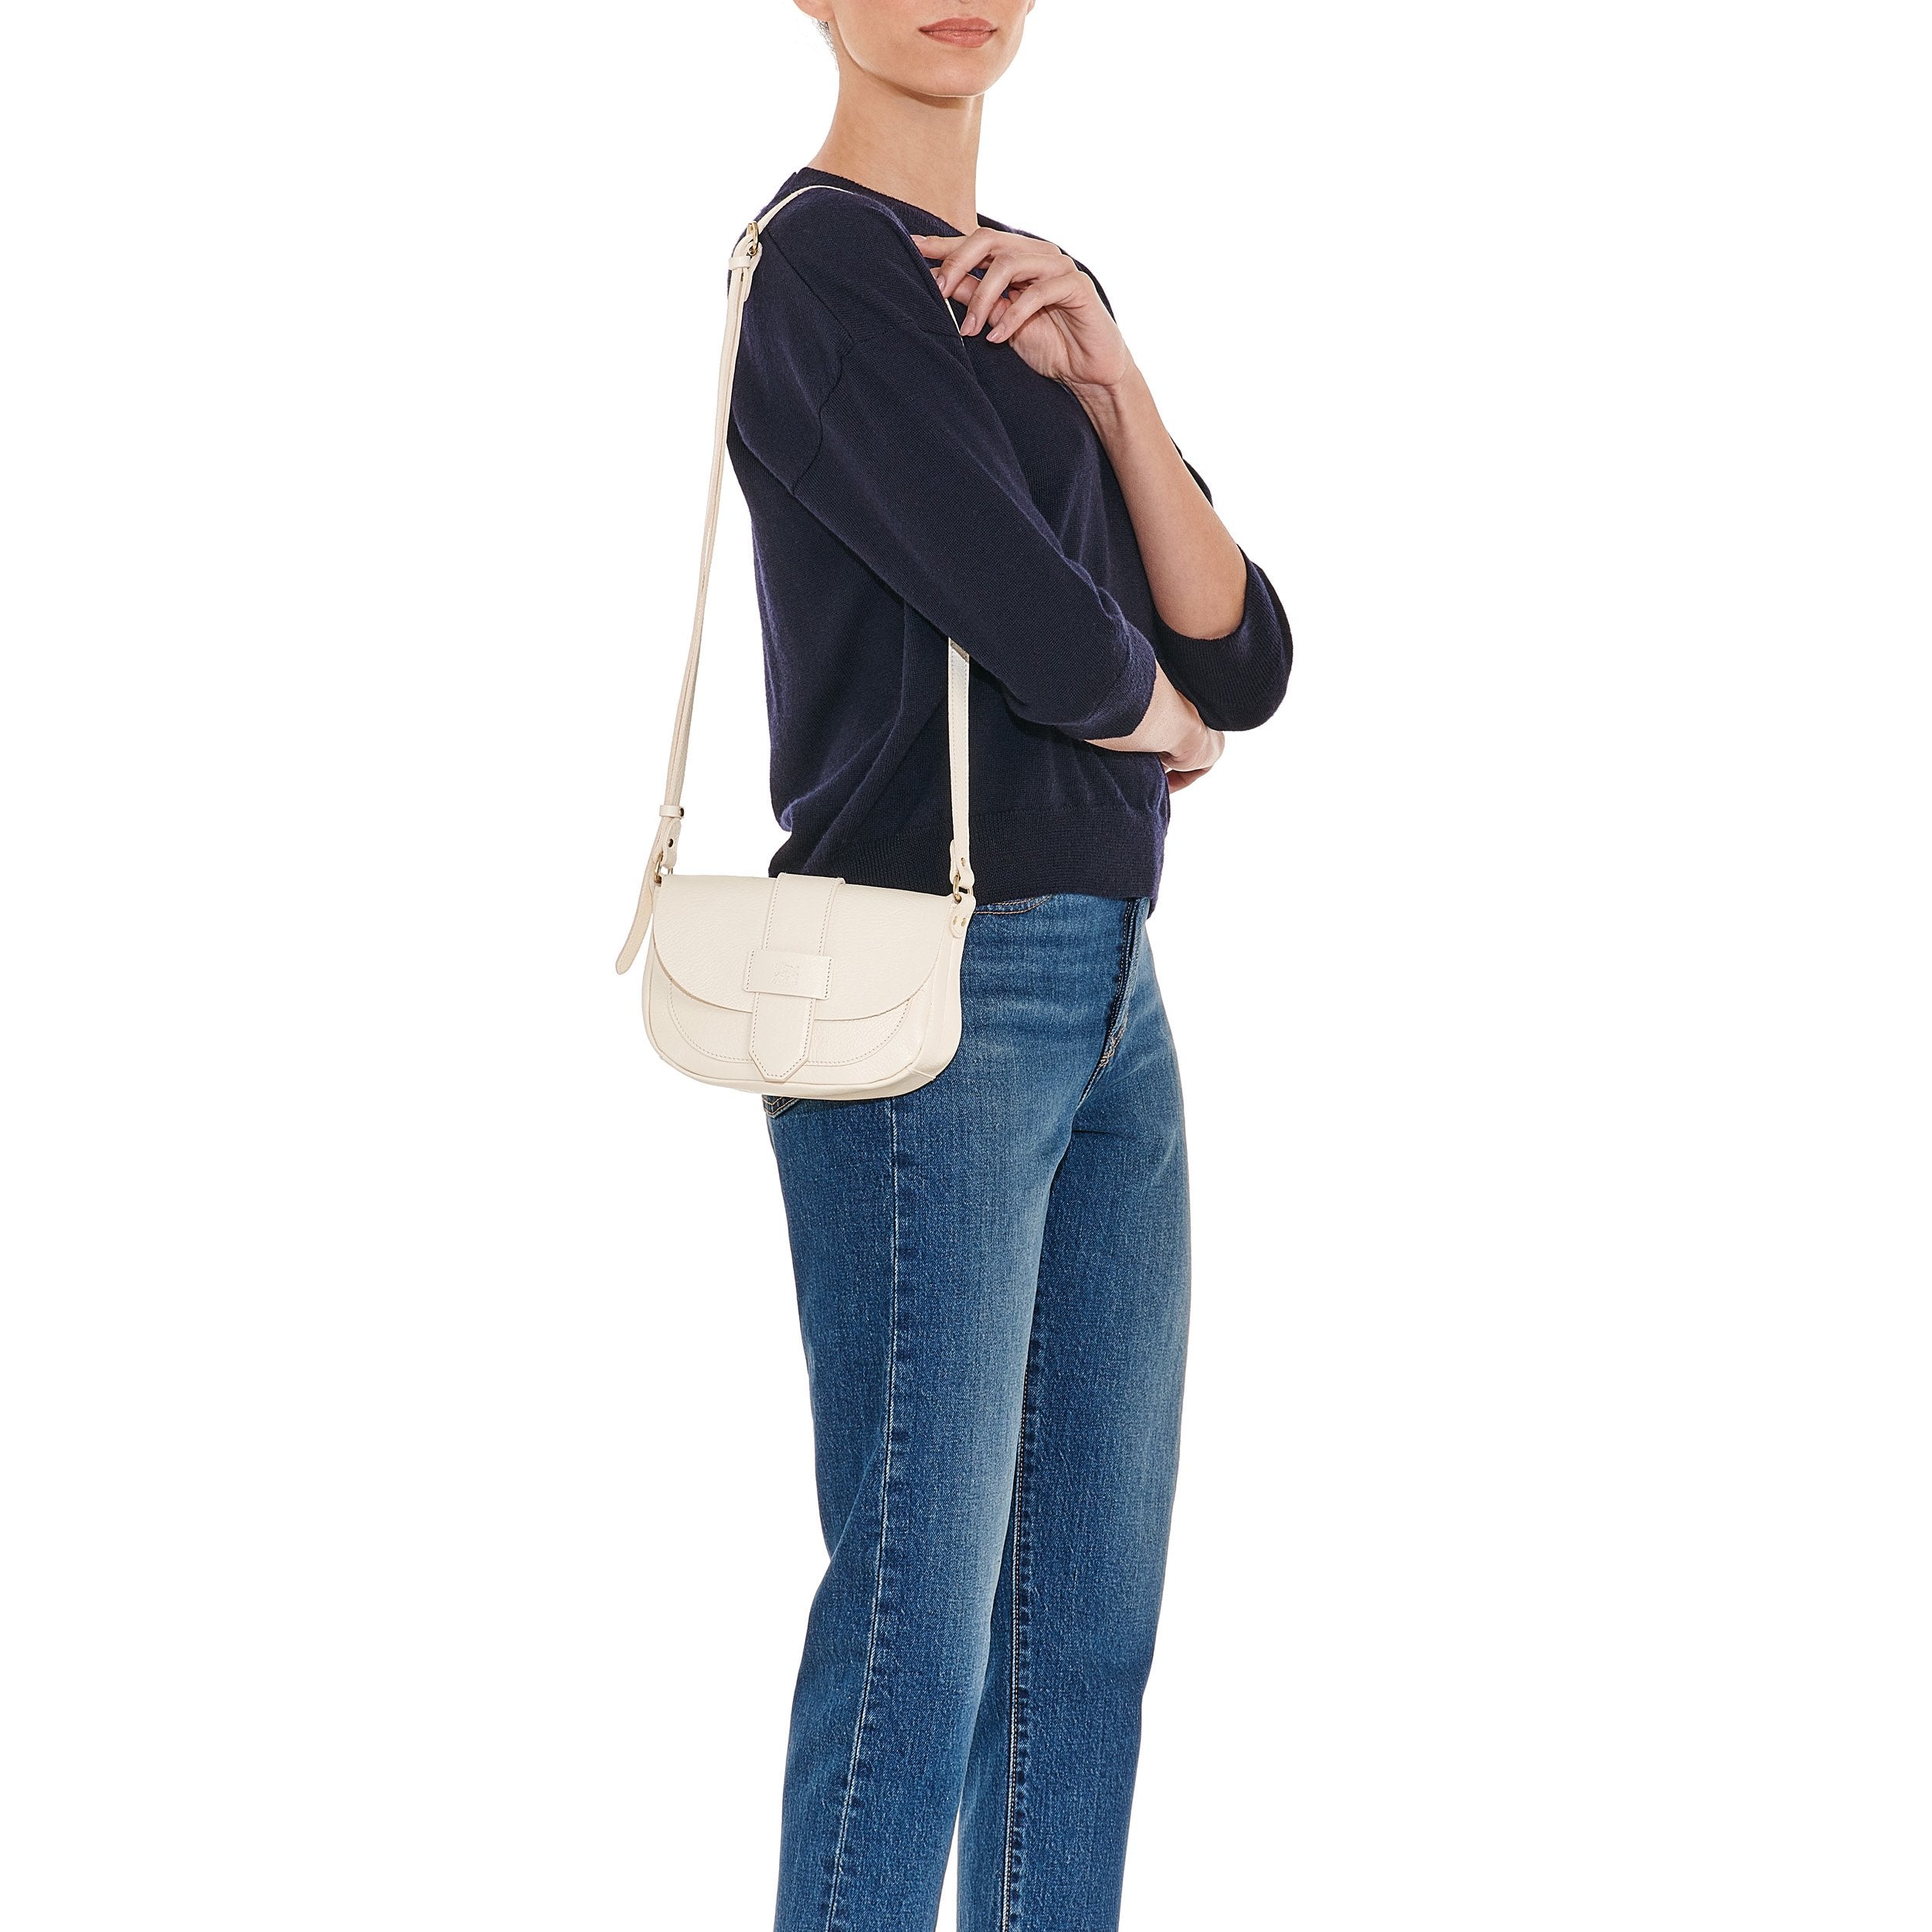 Fausta Small | Women's crossbody bag in leather color milk